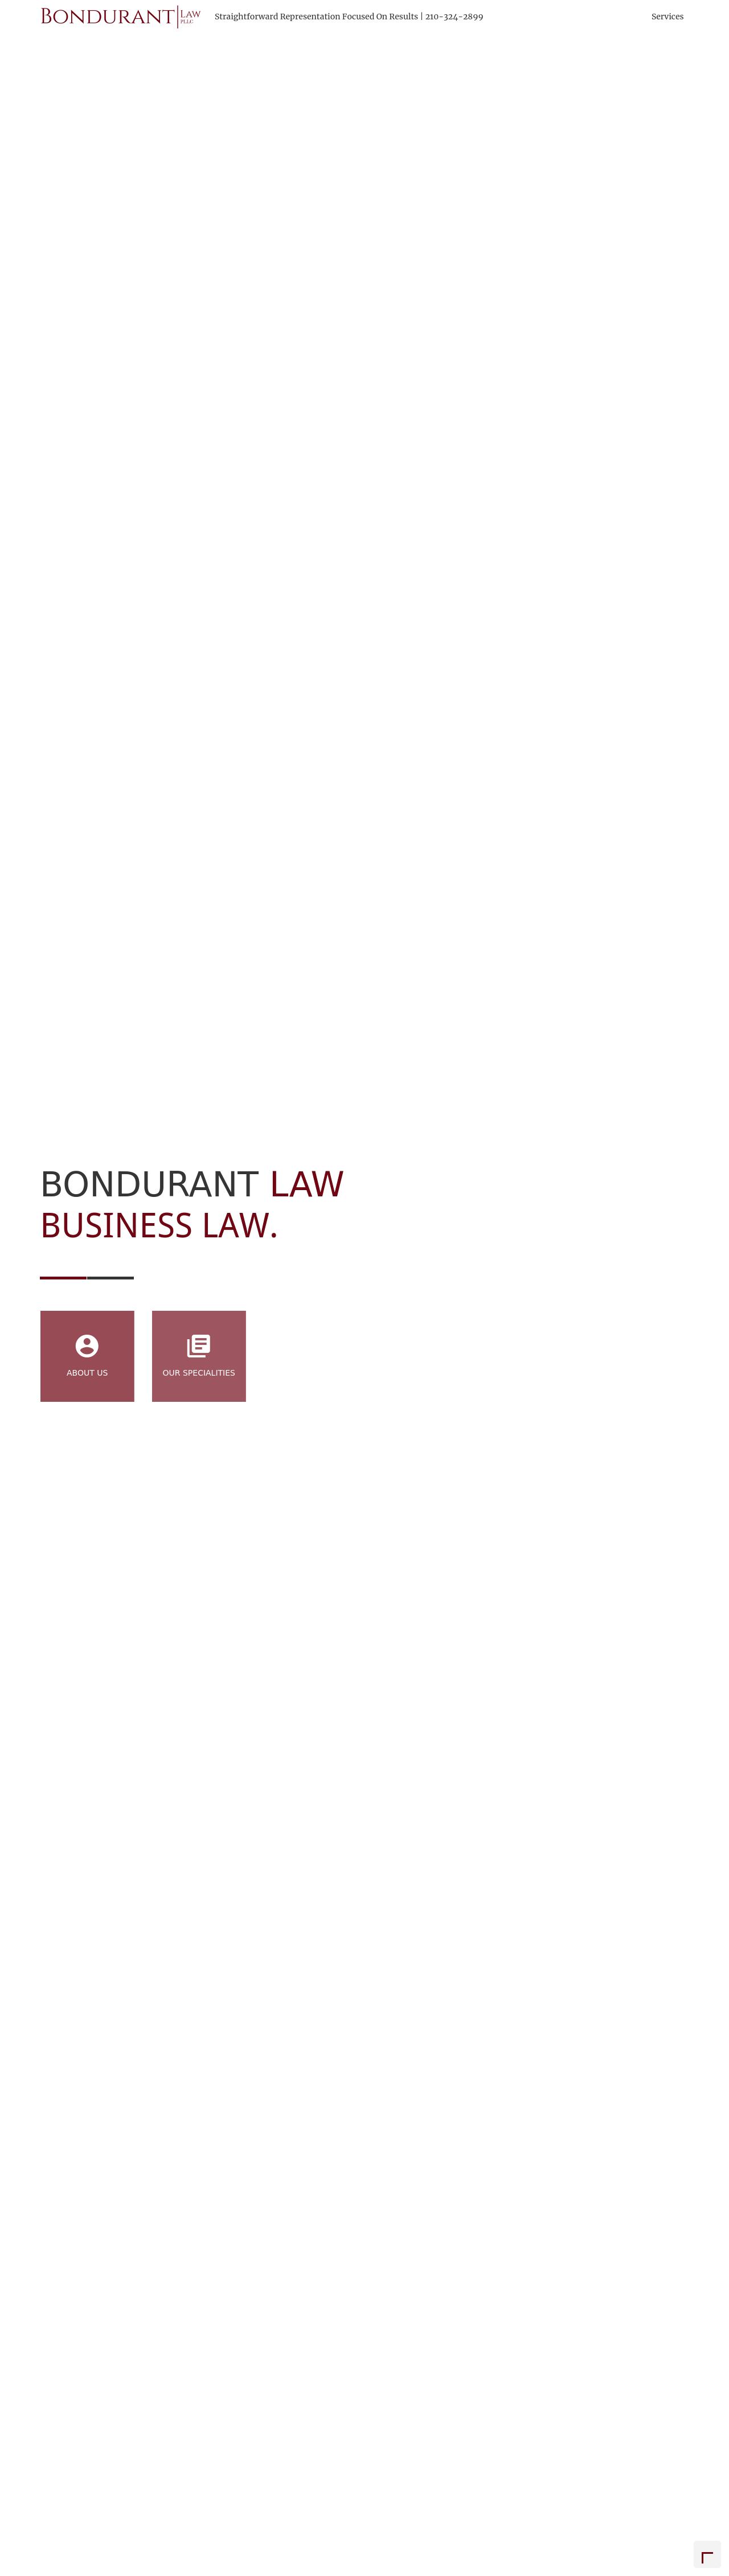 Bondurant Law, PLLC - San Antonio TX Lawyers